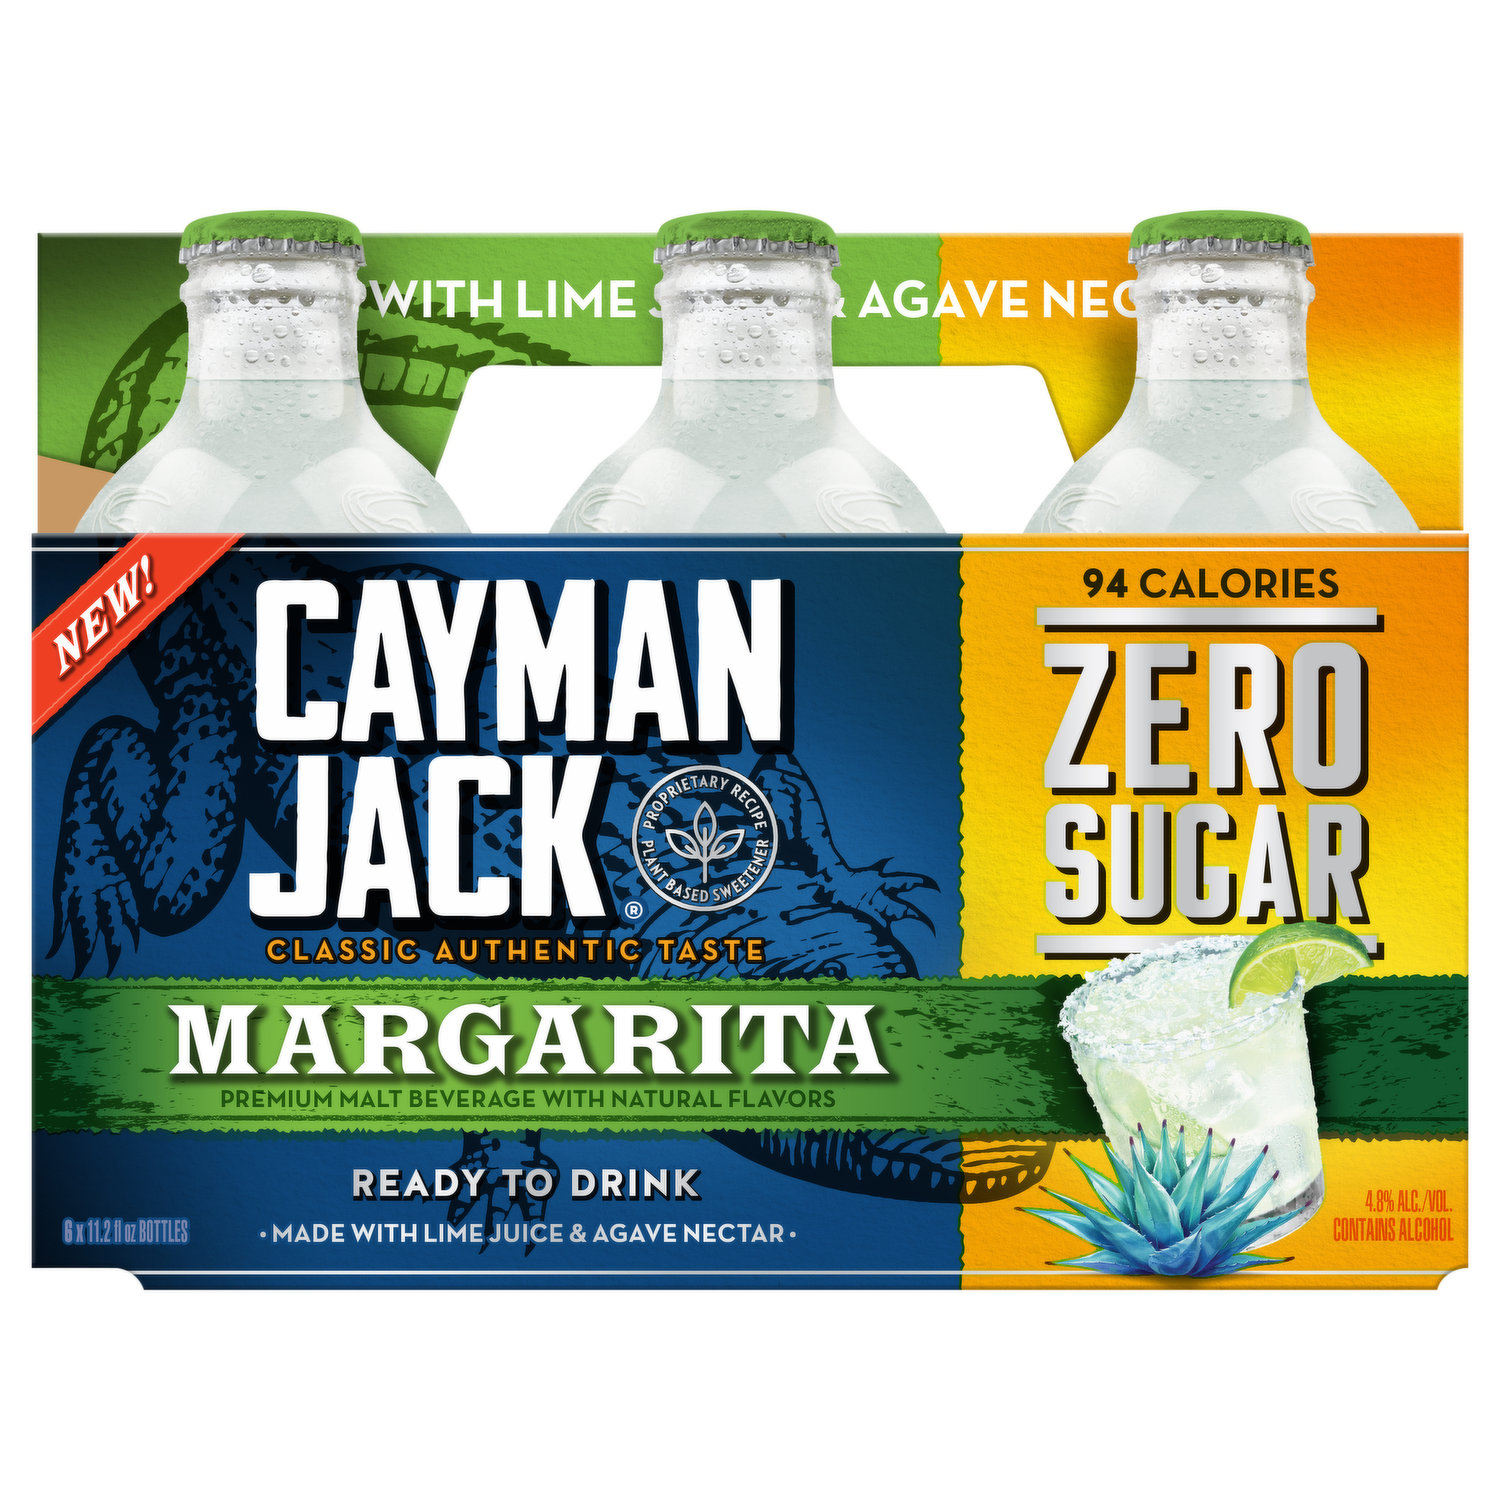 Cayman Jack Zero Sugar Sampling Finley Beer